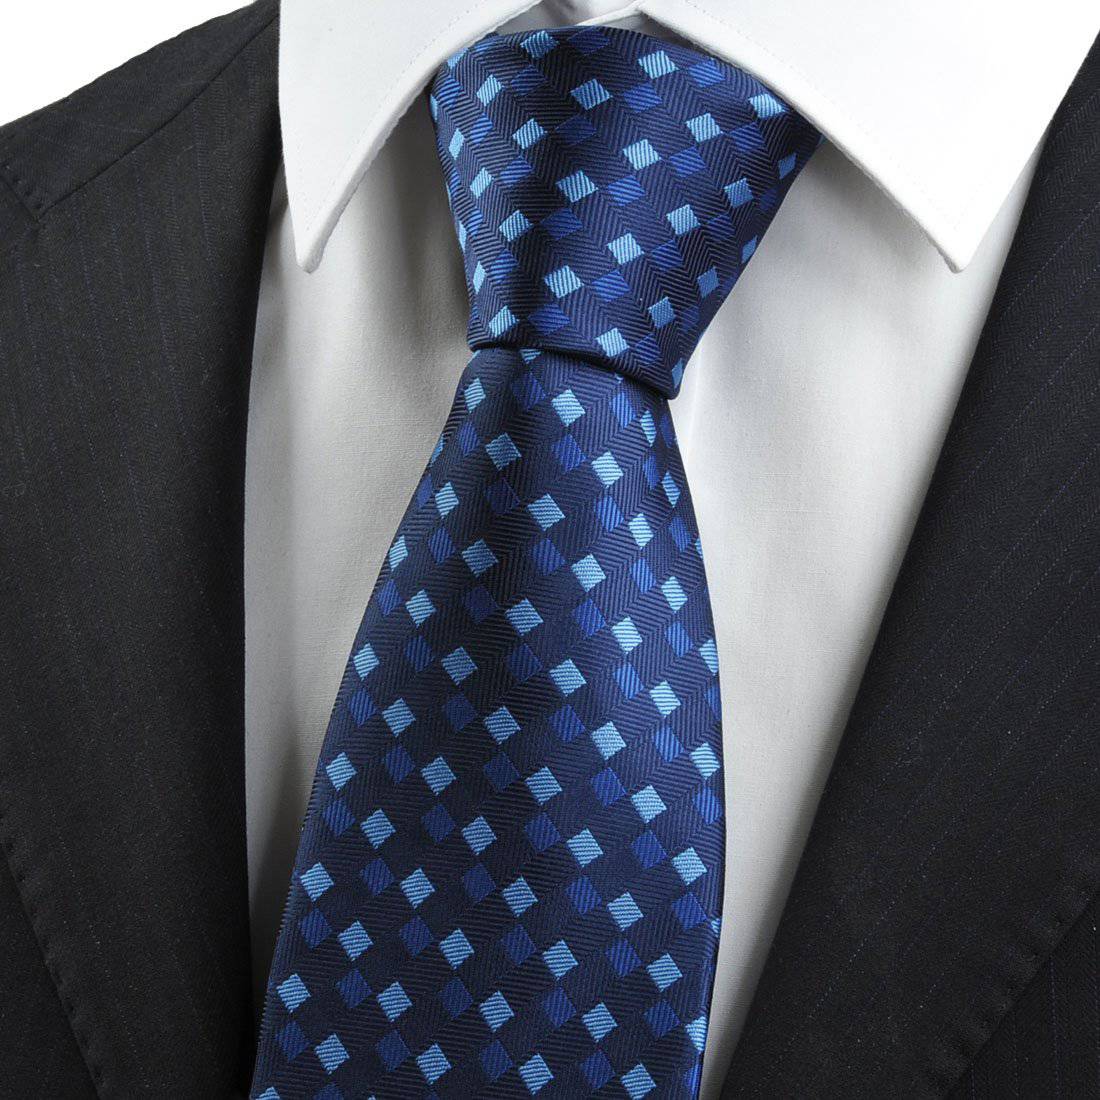 Denim-Yale-Carolina Plaid Tie - Tie, bowtie, pocket square  | Kissties